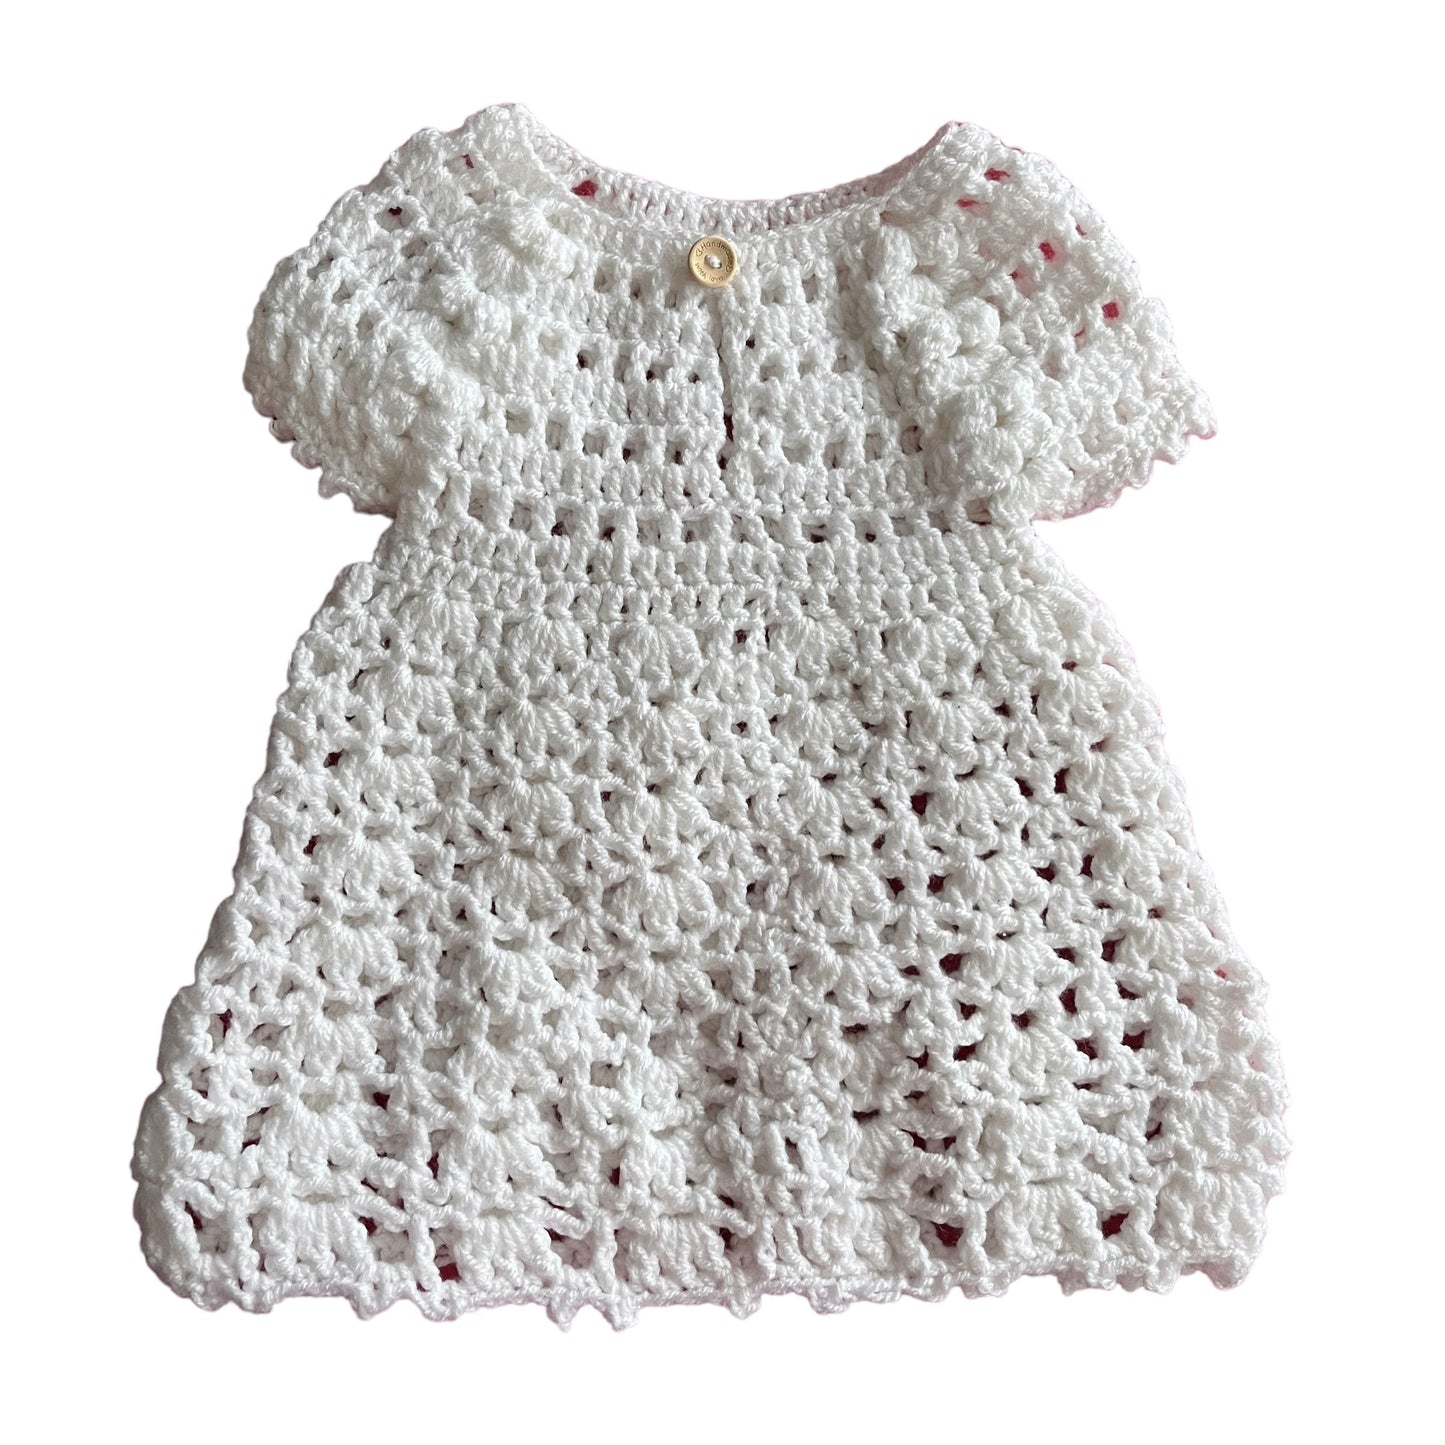 1970s White Crochet Knitted Dress 0-6 Months